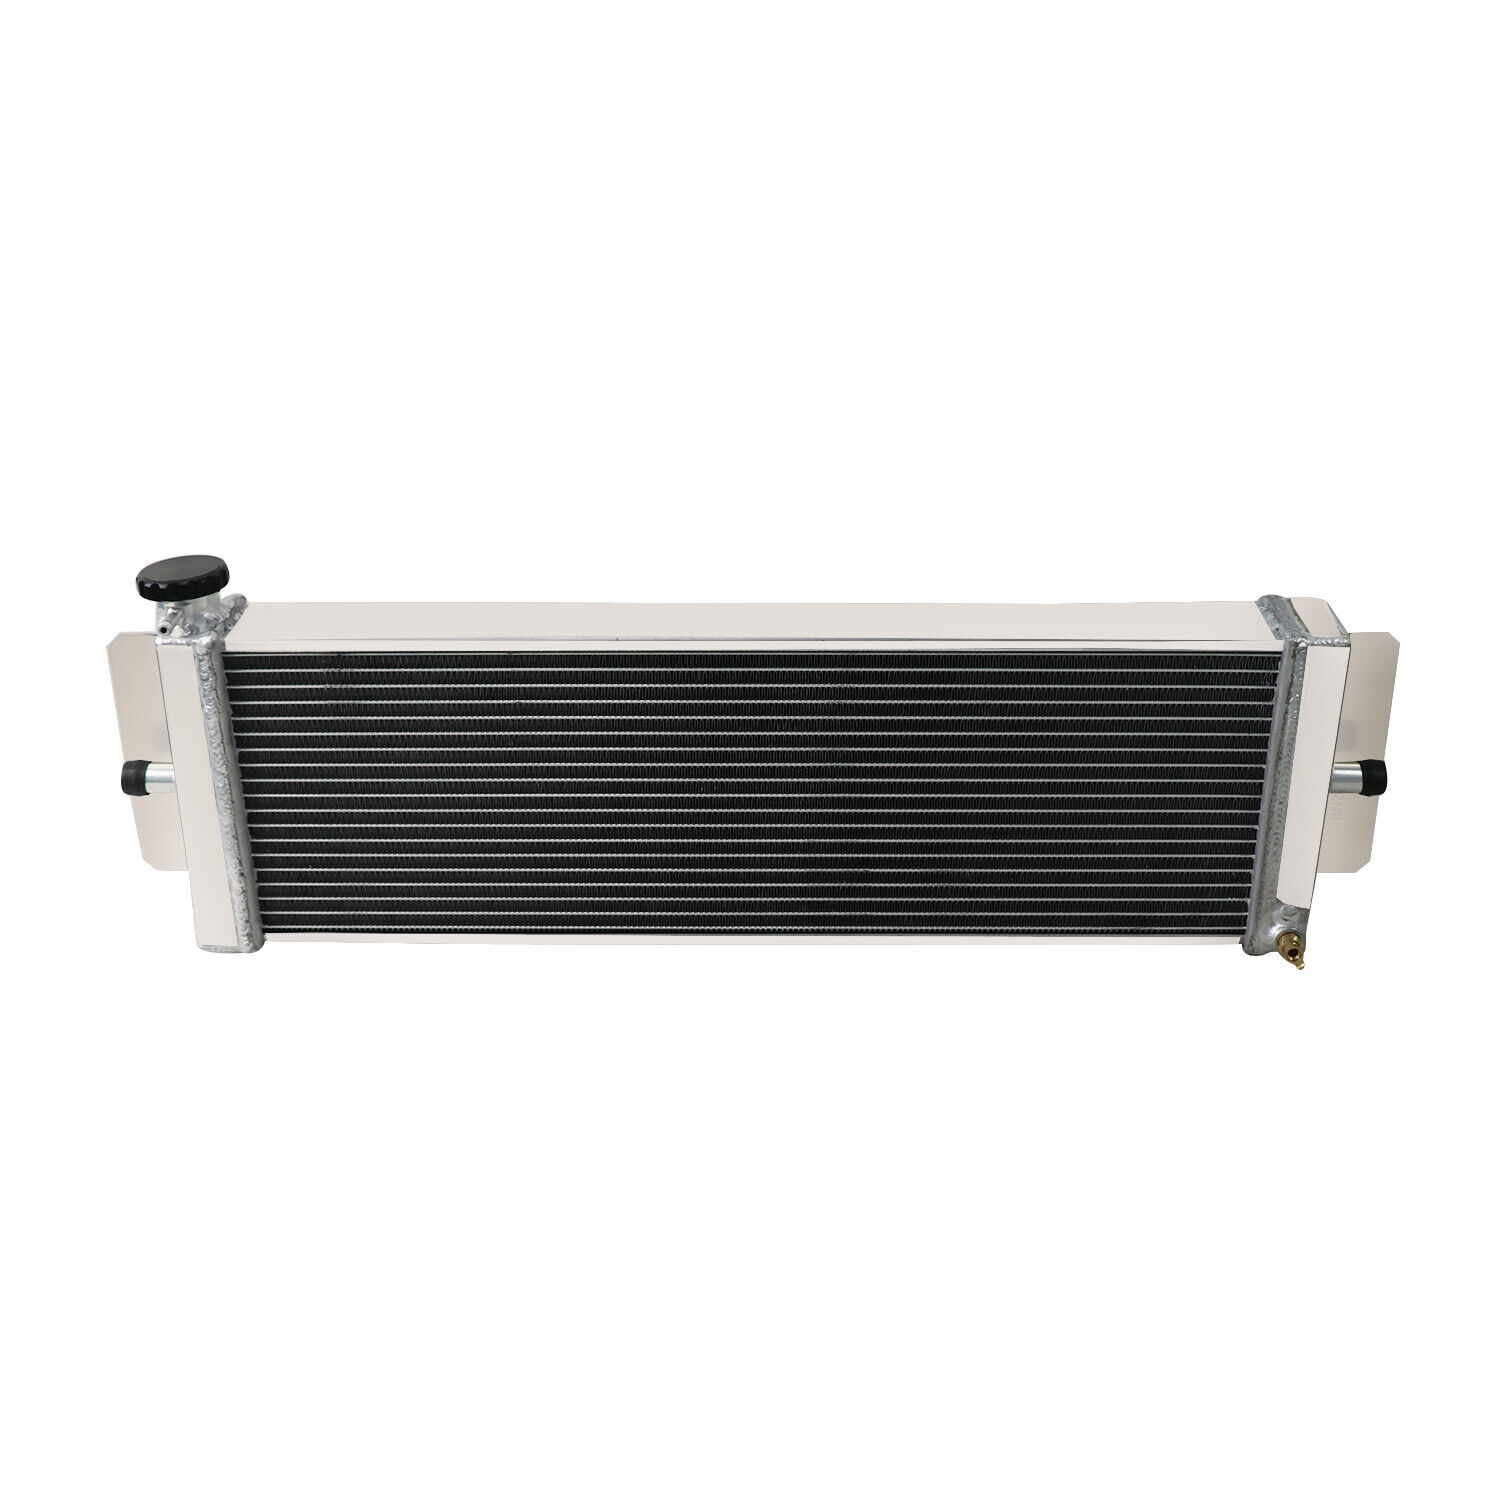 Universal Aluminum Radiator Air to Water Intercooler Heat Exchanger Silver 2Rows